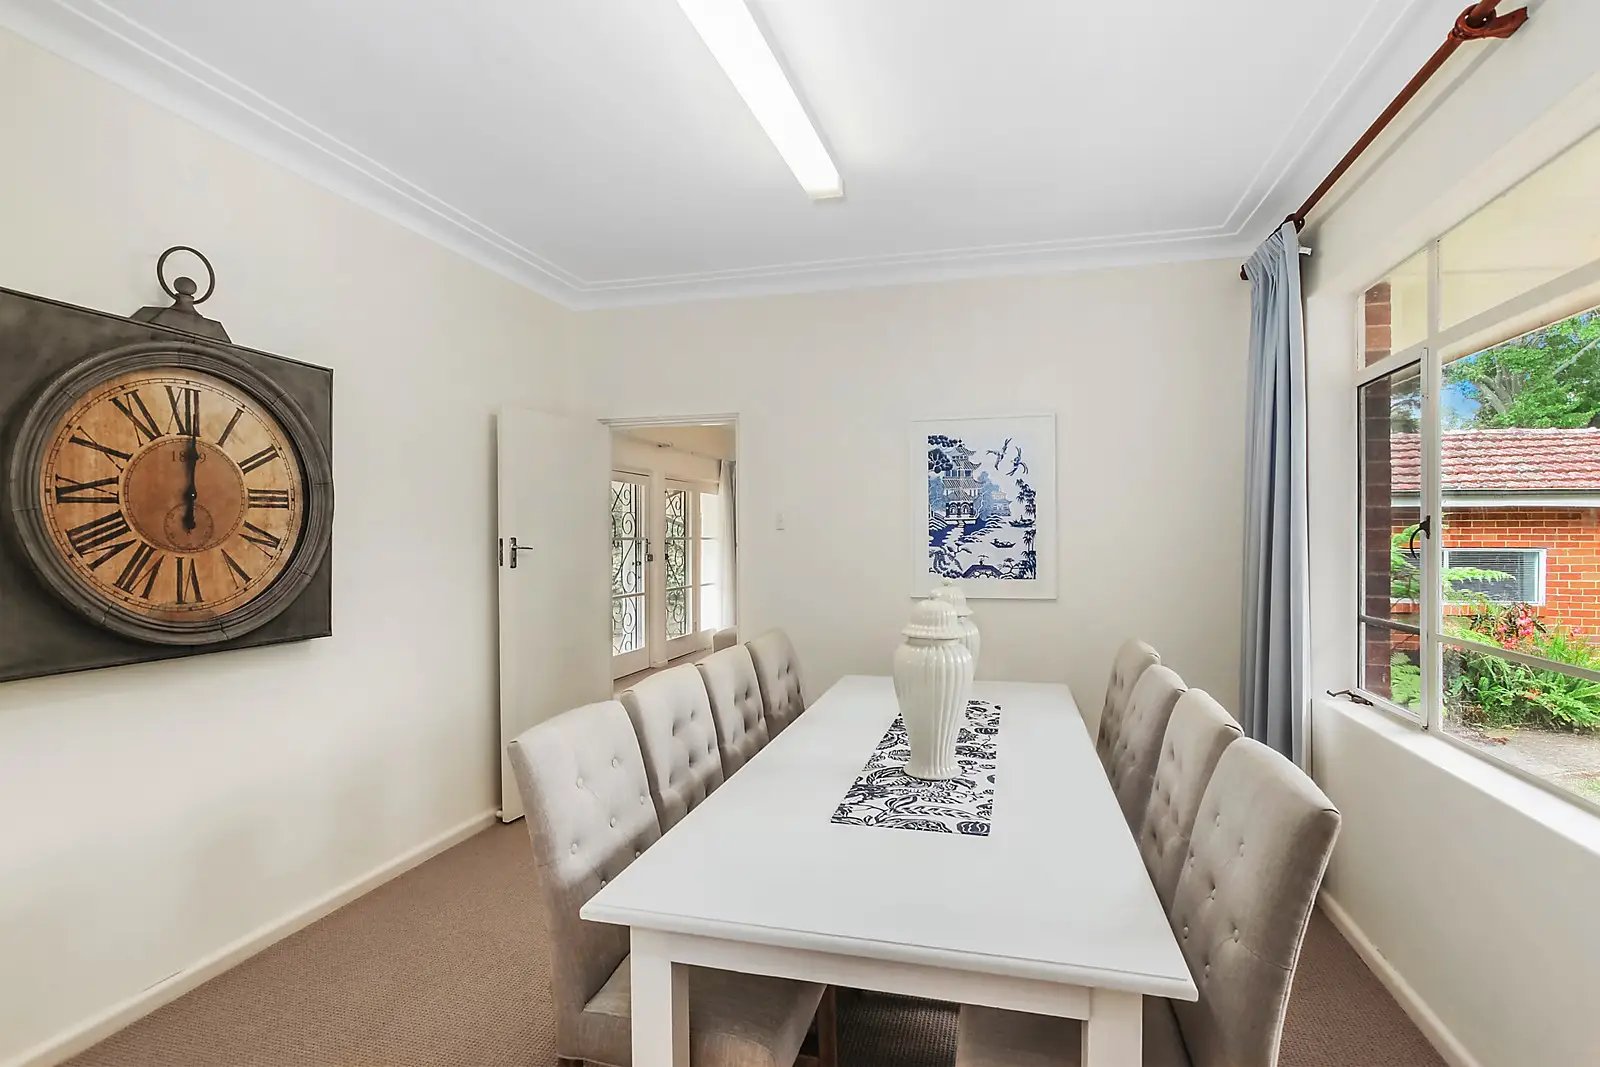 Photo #3: 104A Livingstone Avenue, Pymble - Sold by Sydney Sotheby's International Realty